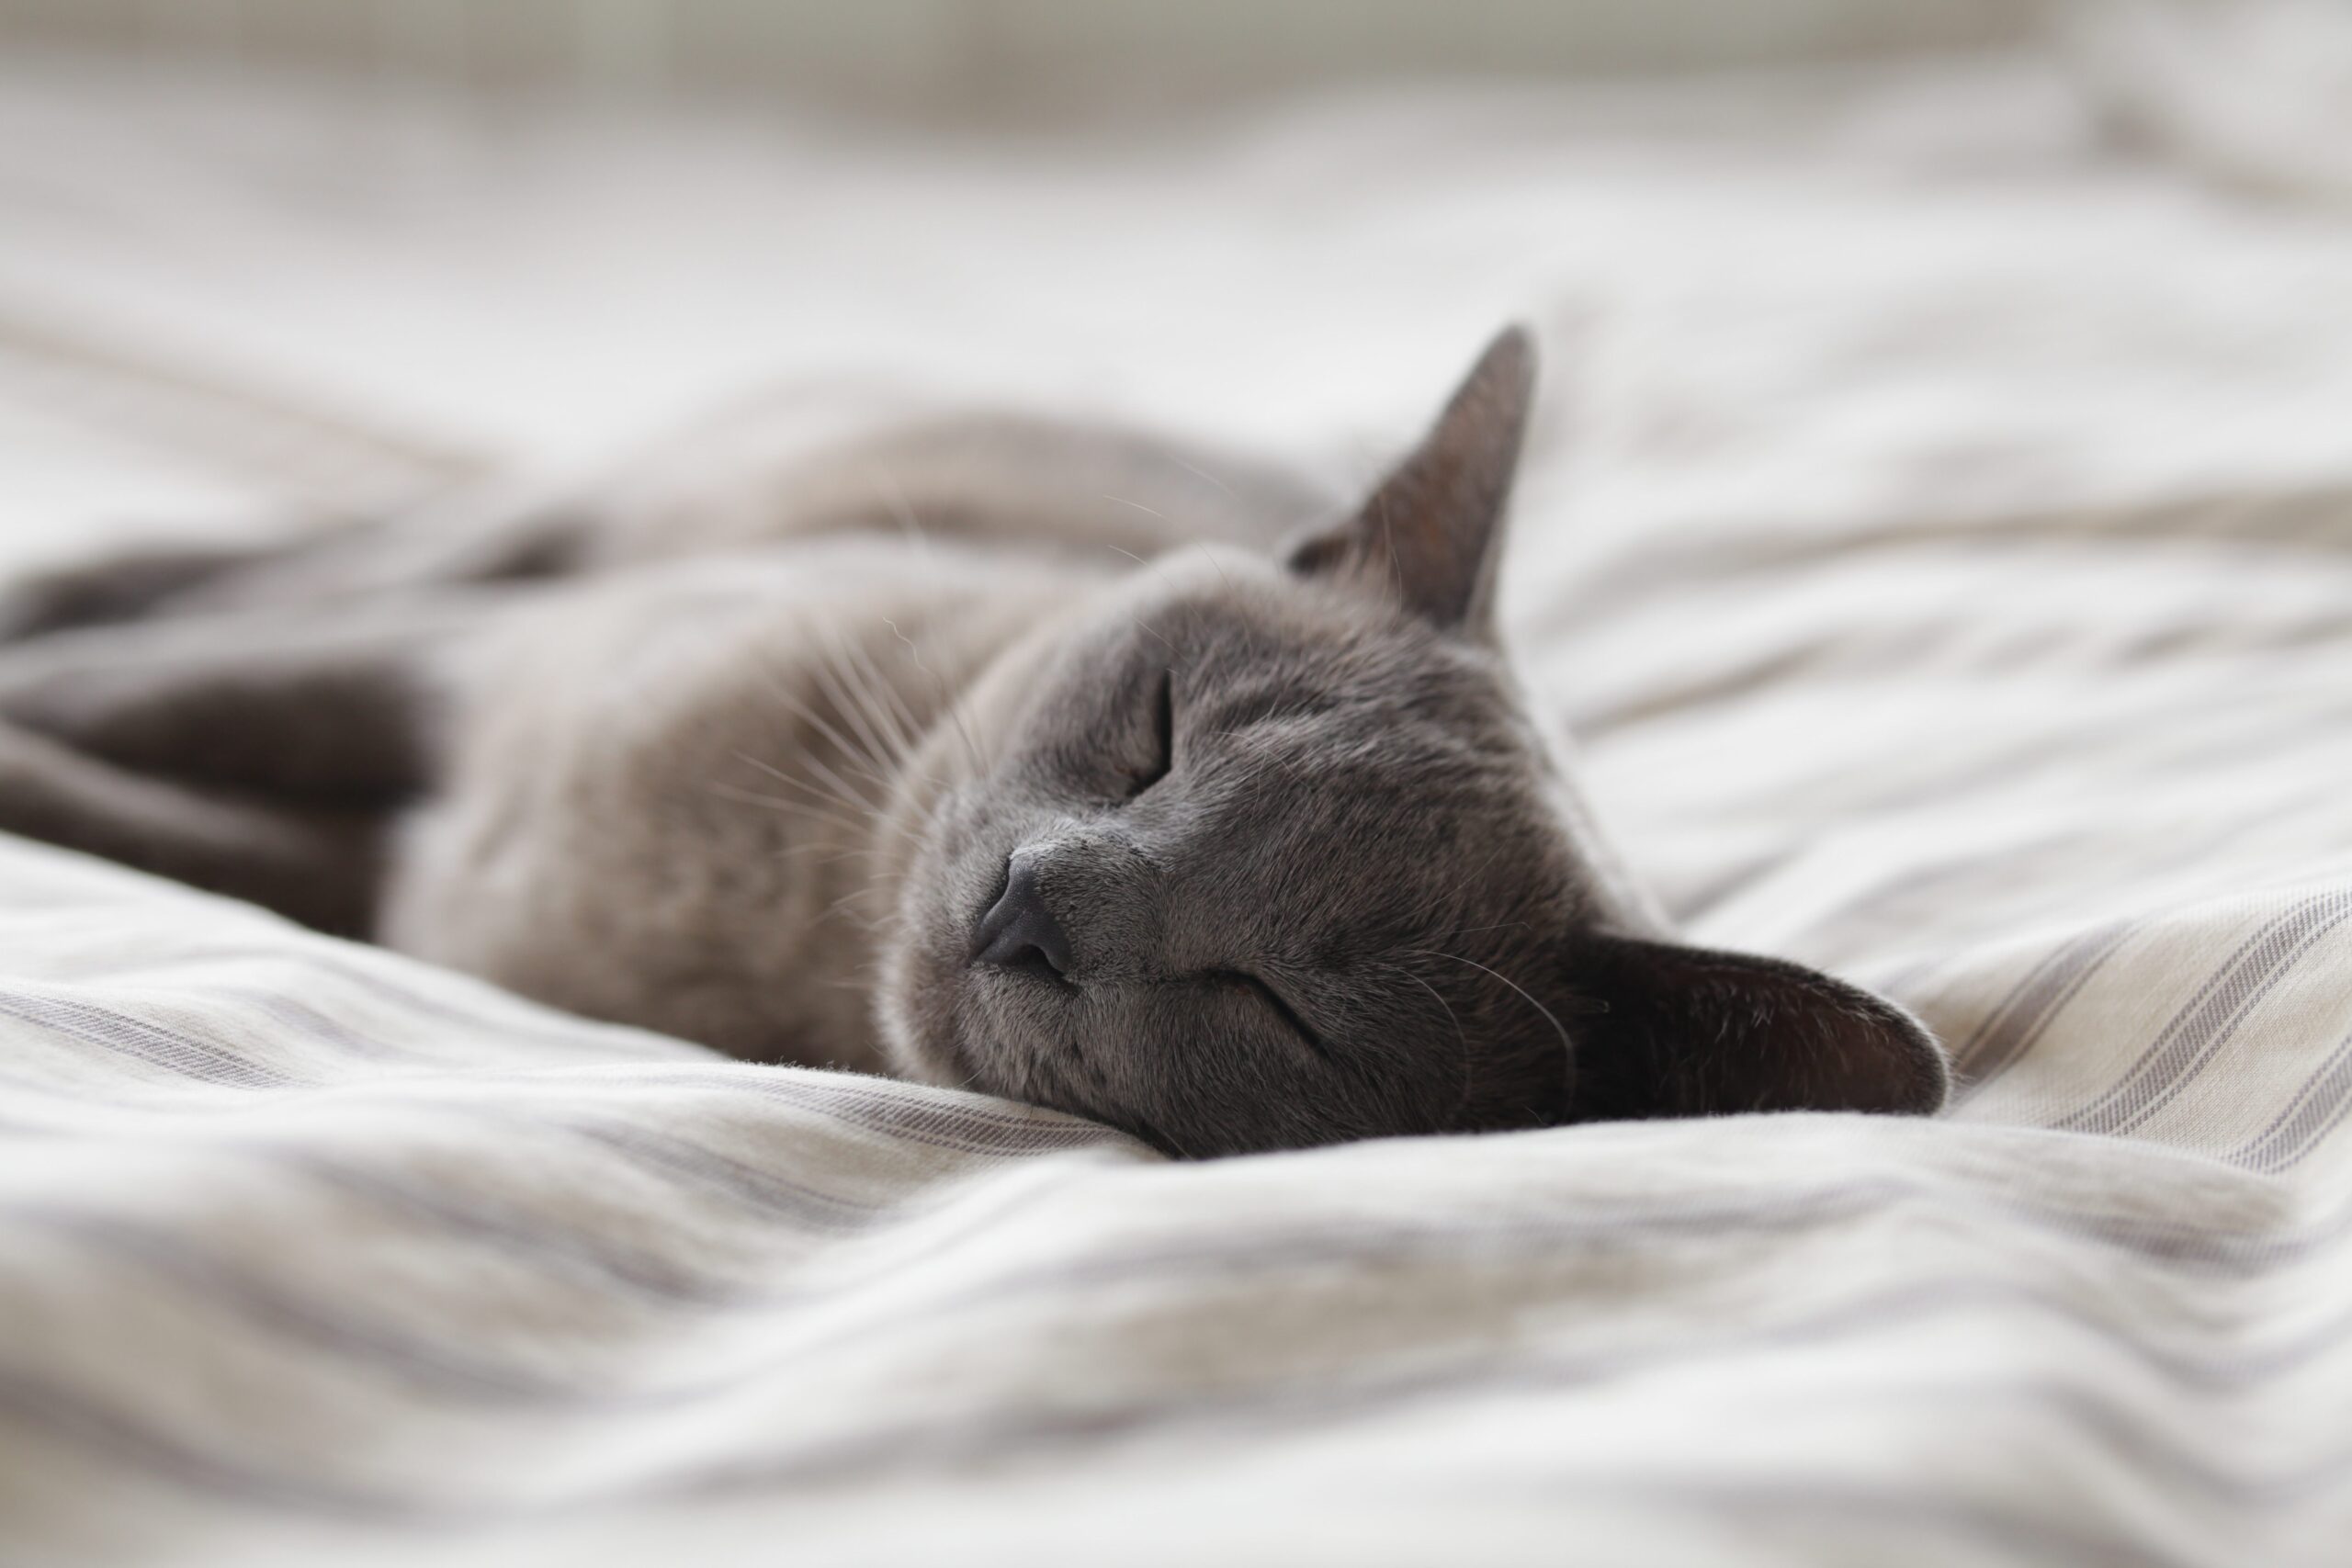 grey cat asleep on a bedsheet to show how to improve your sleep hygiene